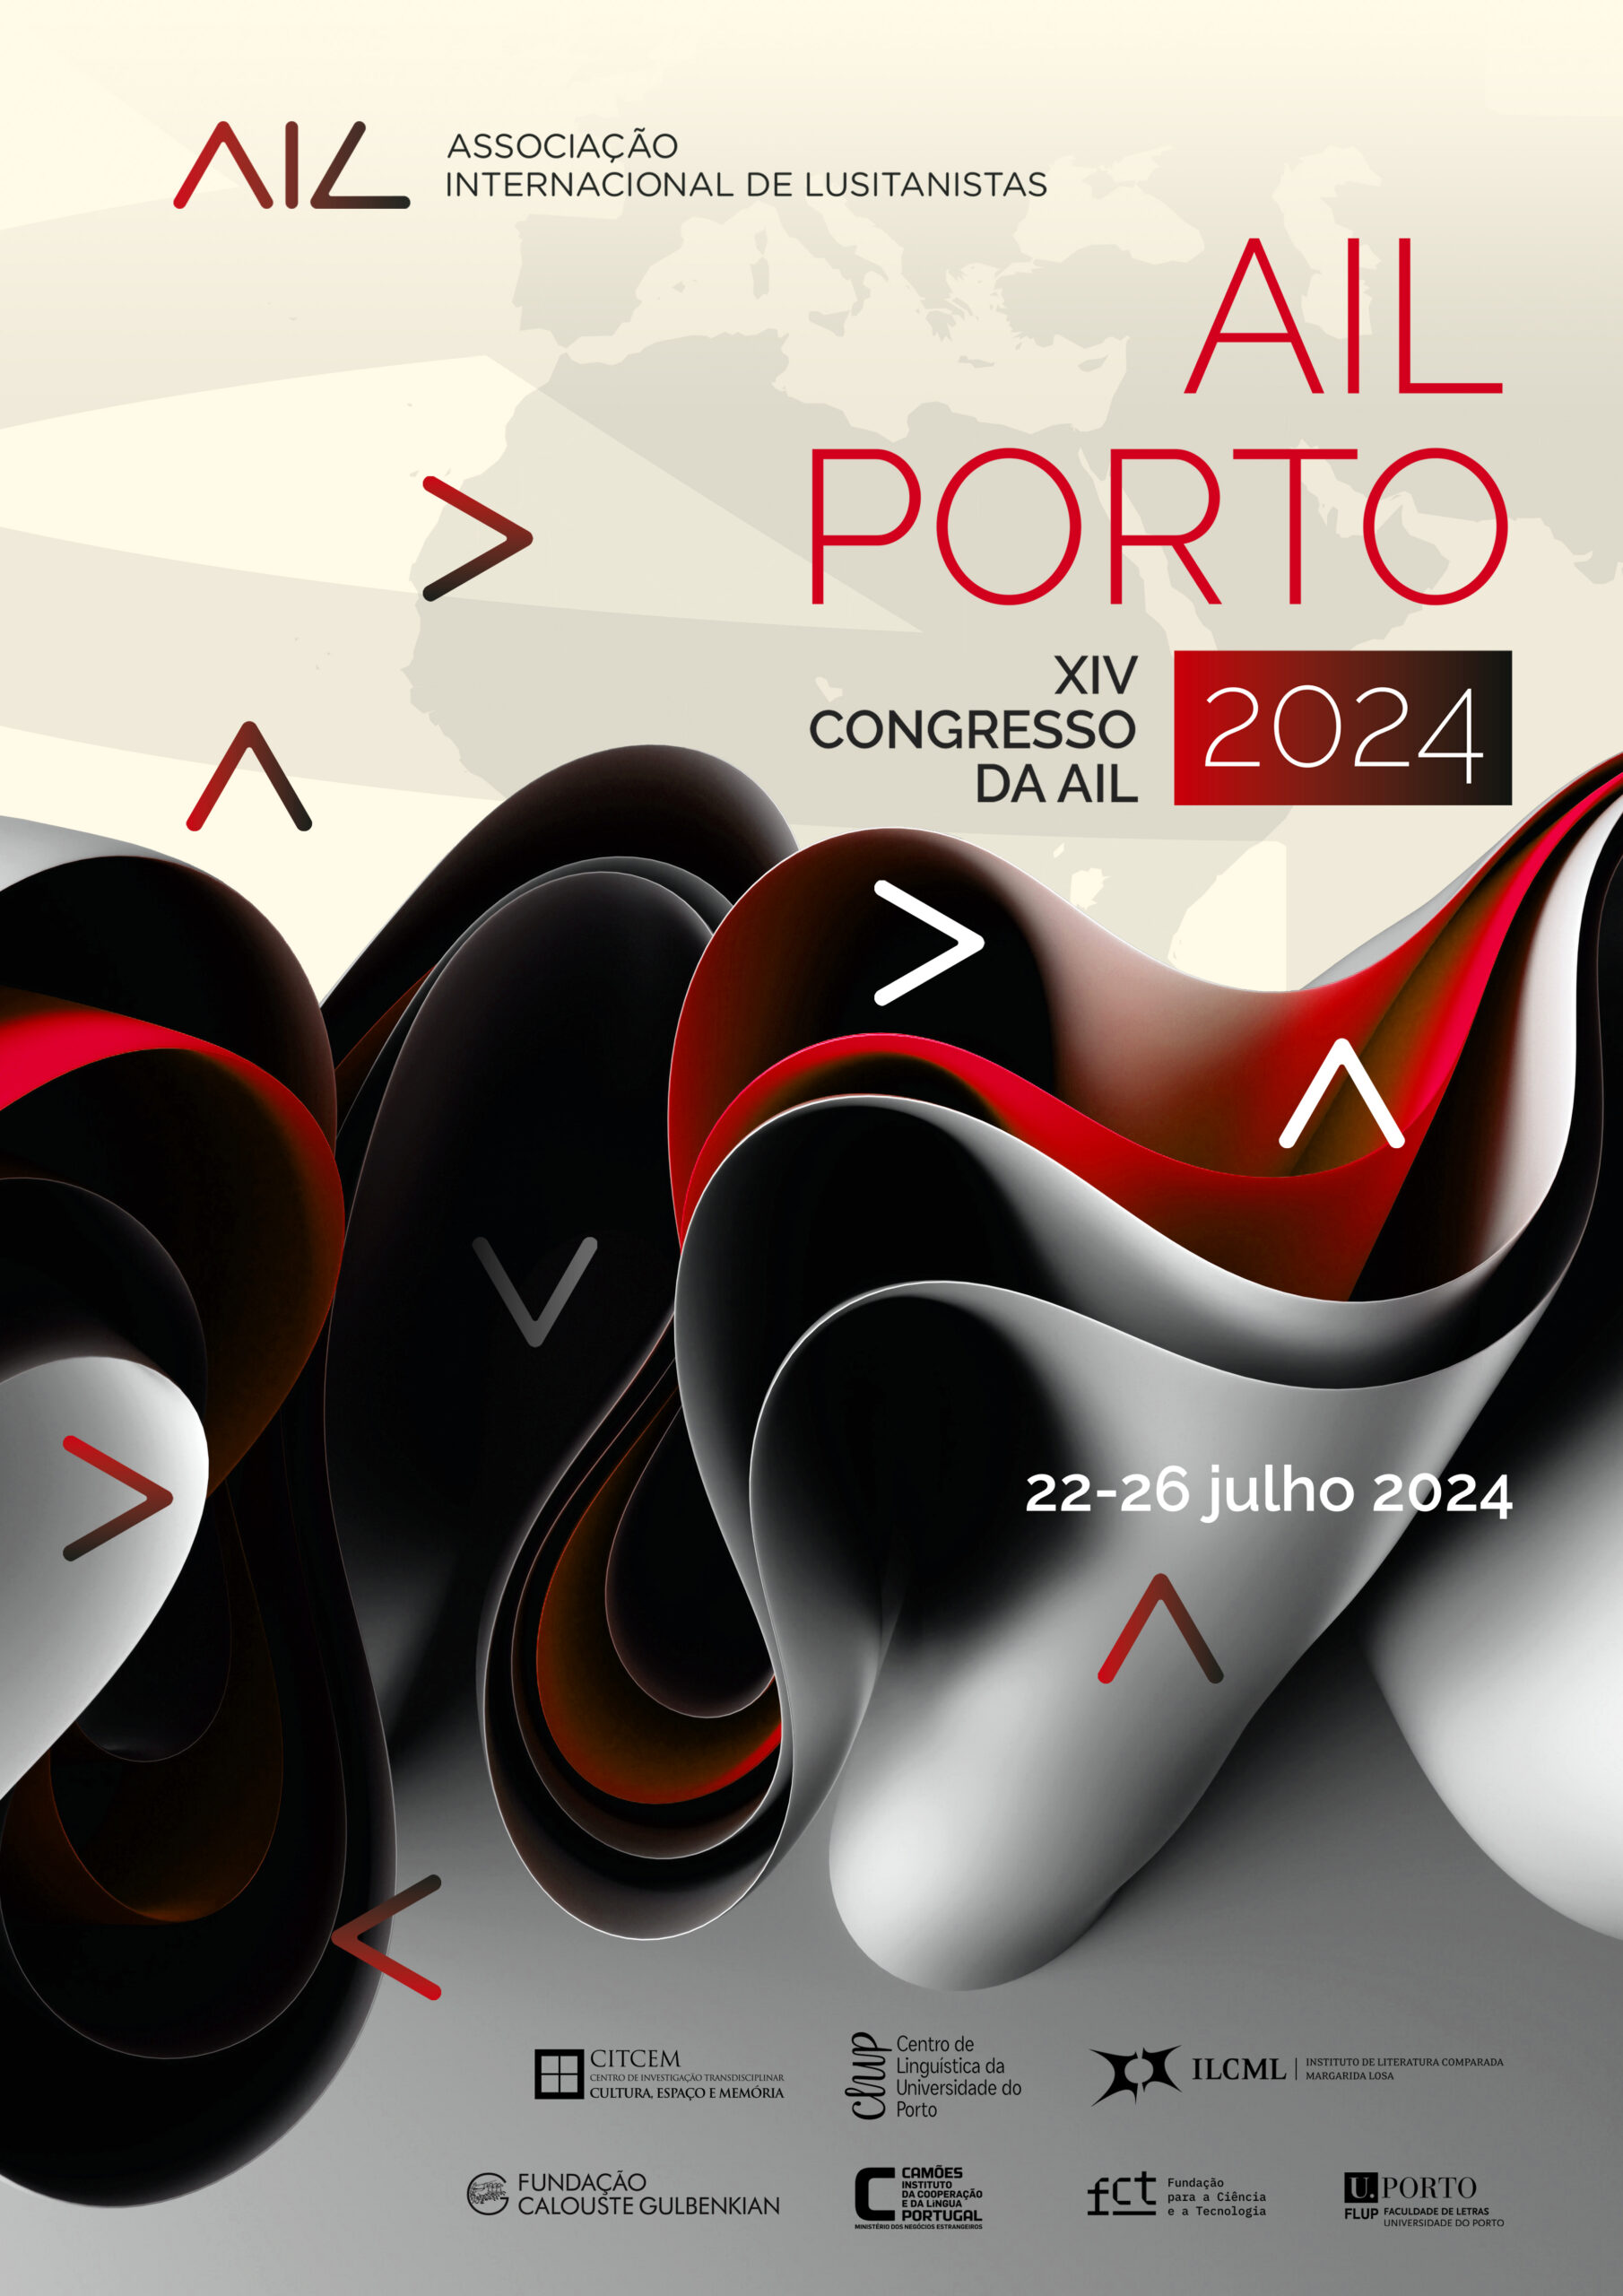 AIL-PORTO_2024_portrait-scaled